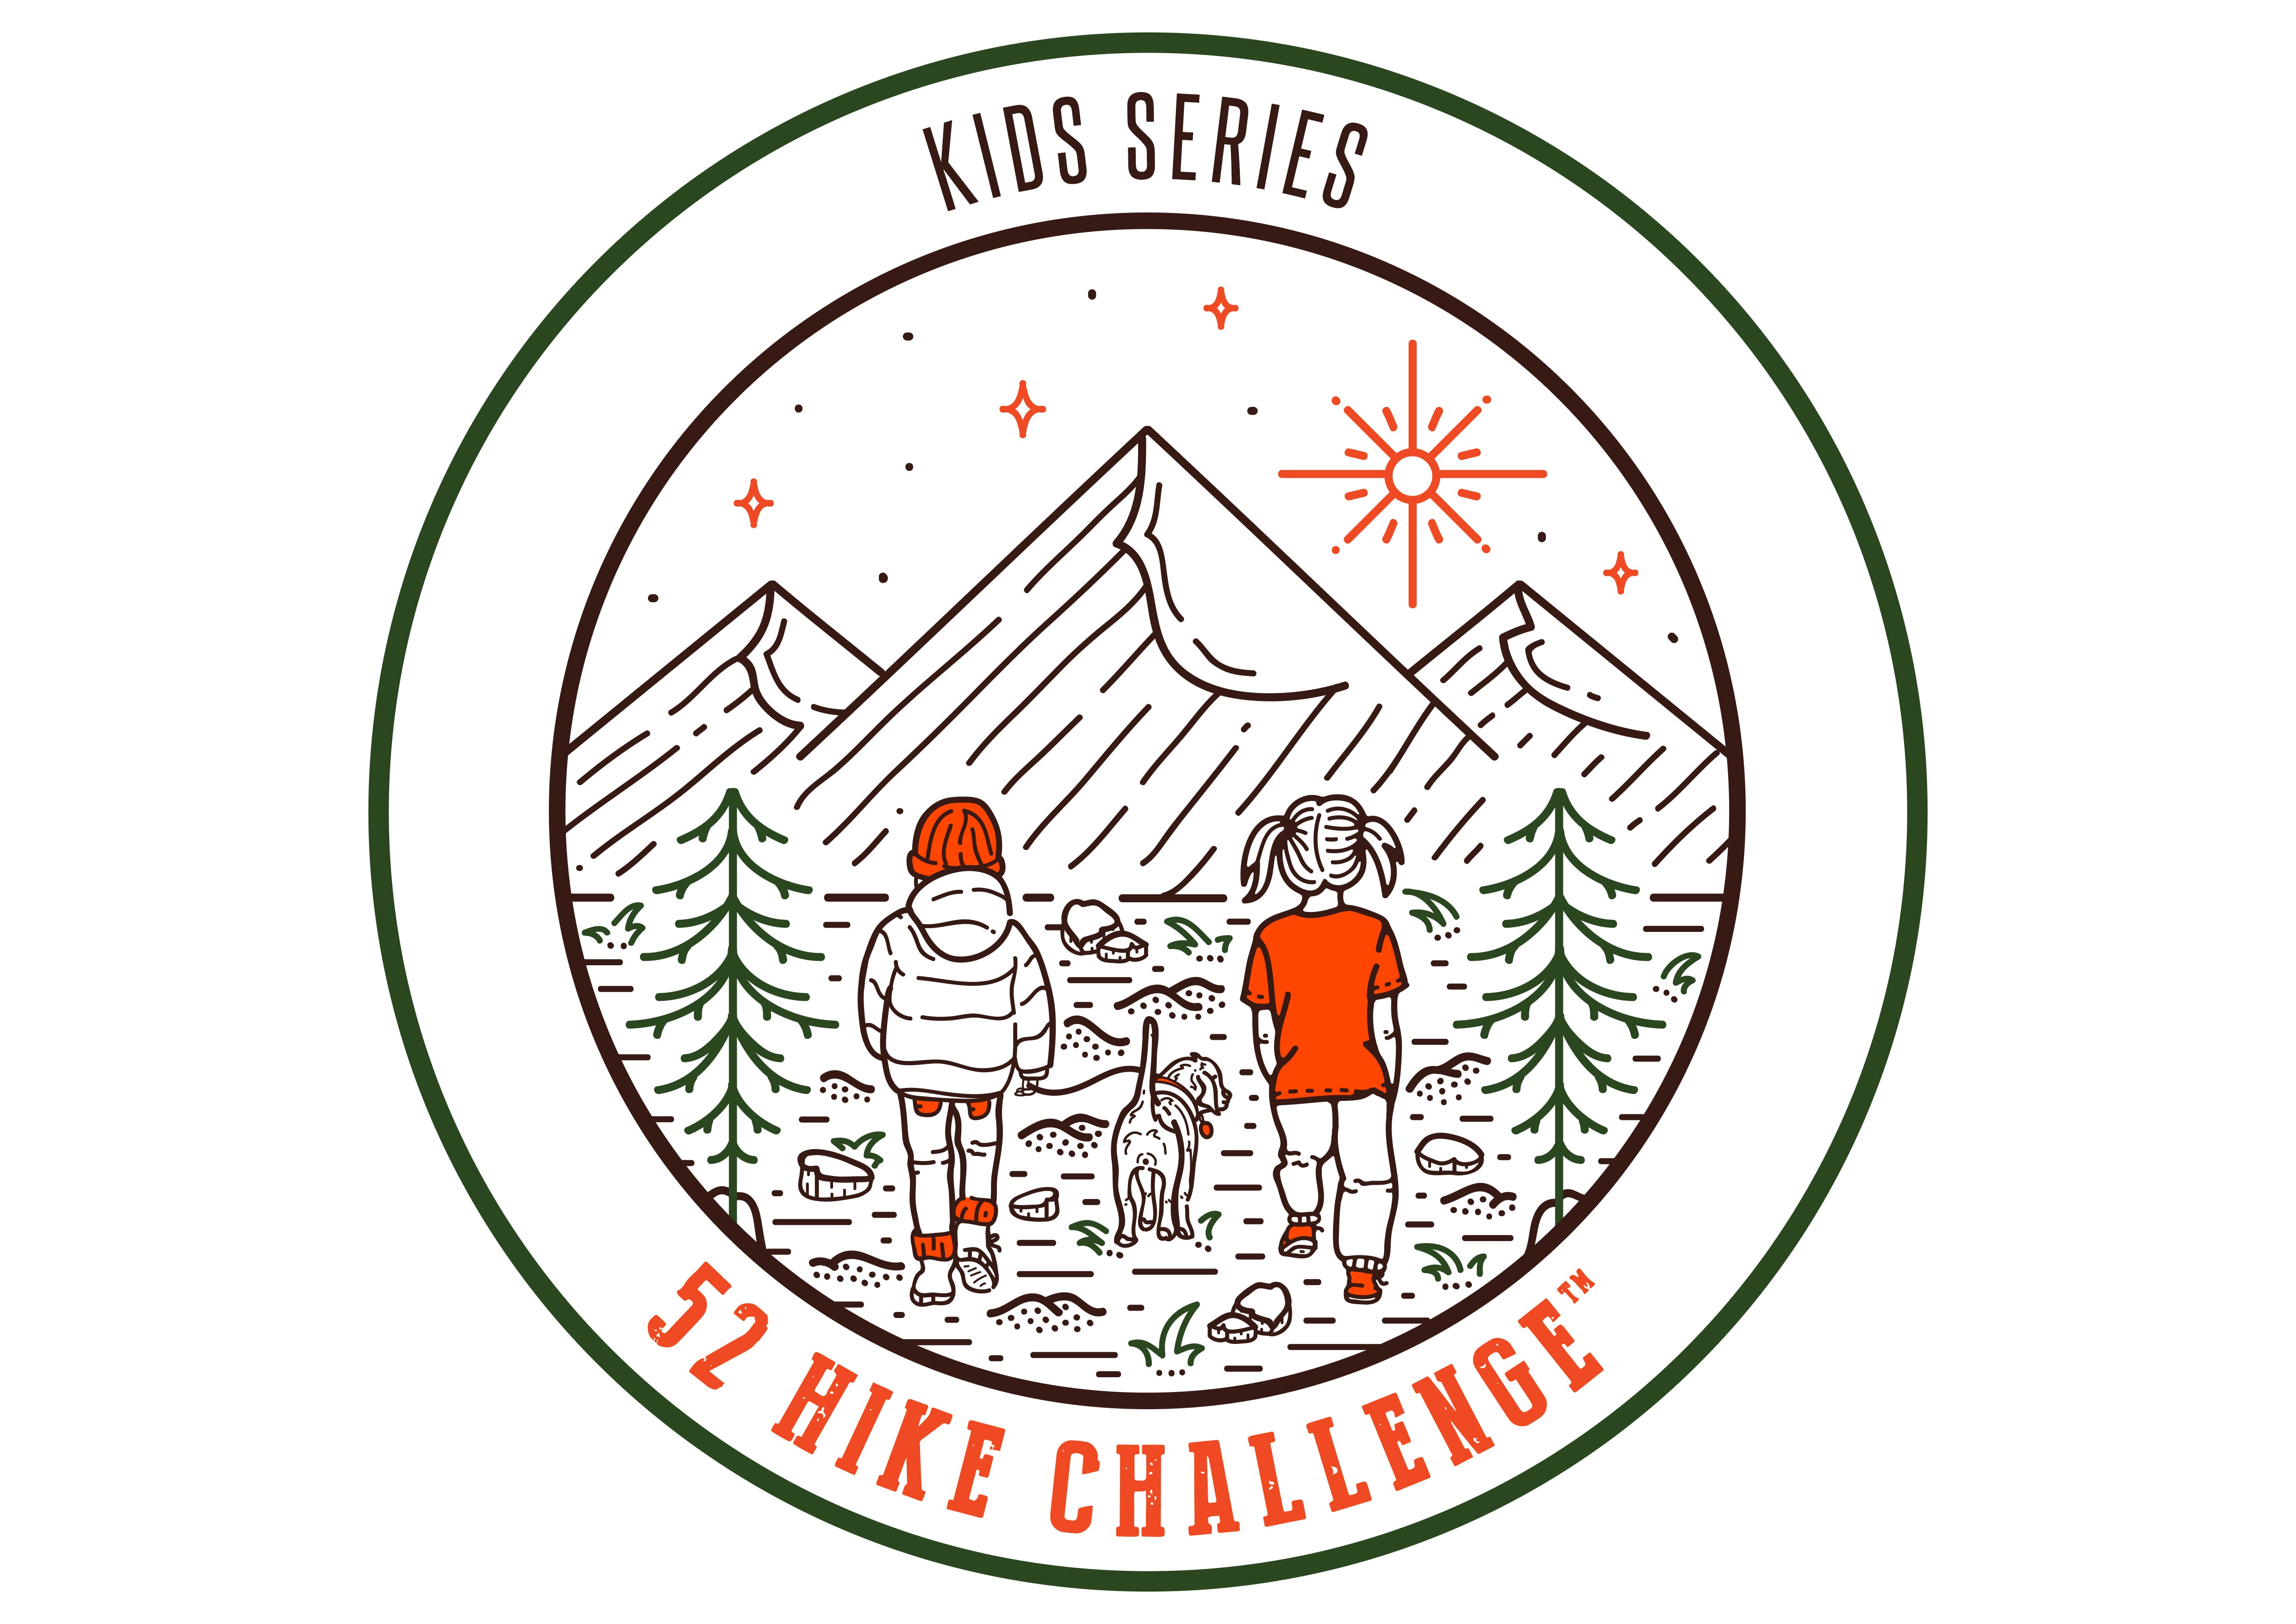 52 Hike Challenge Kids Series Printables Only